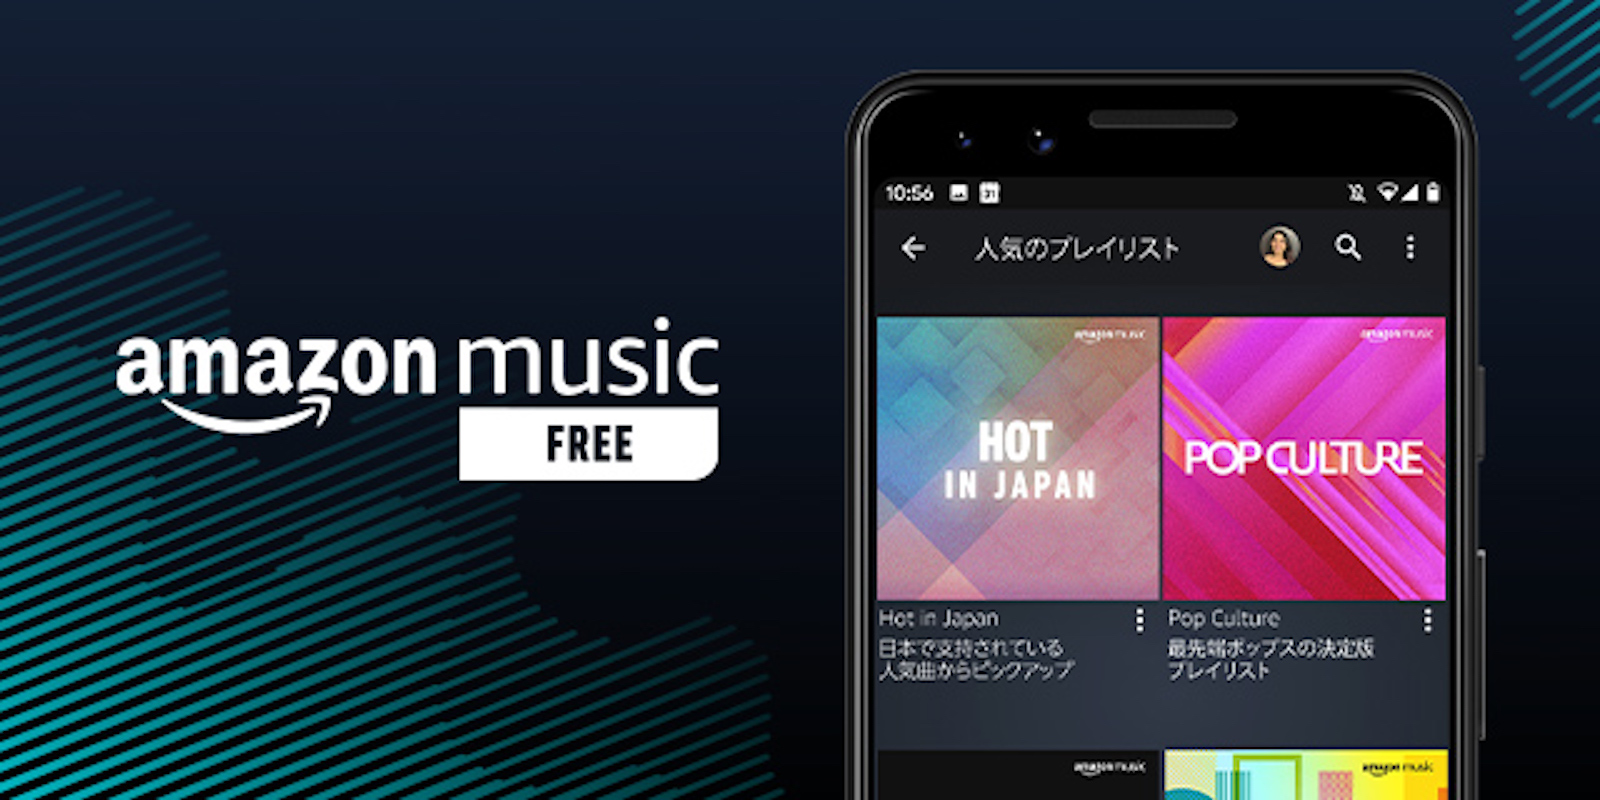 amazon-music-free-with-ads.jpg